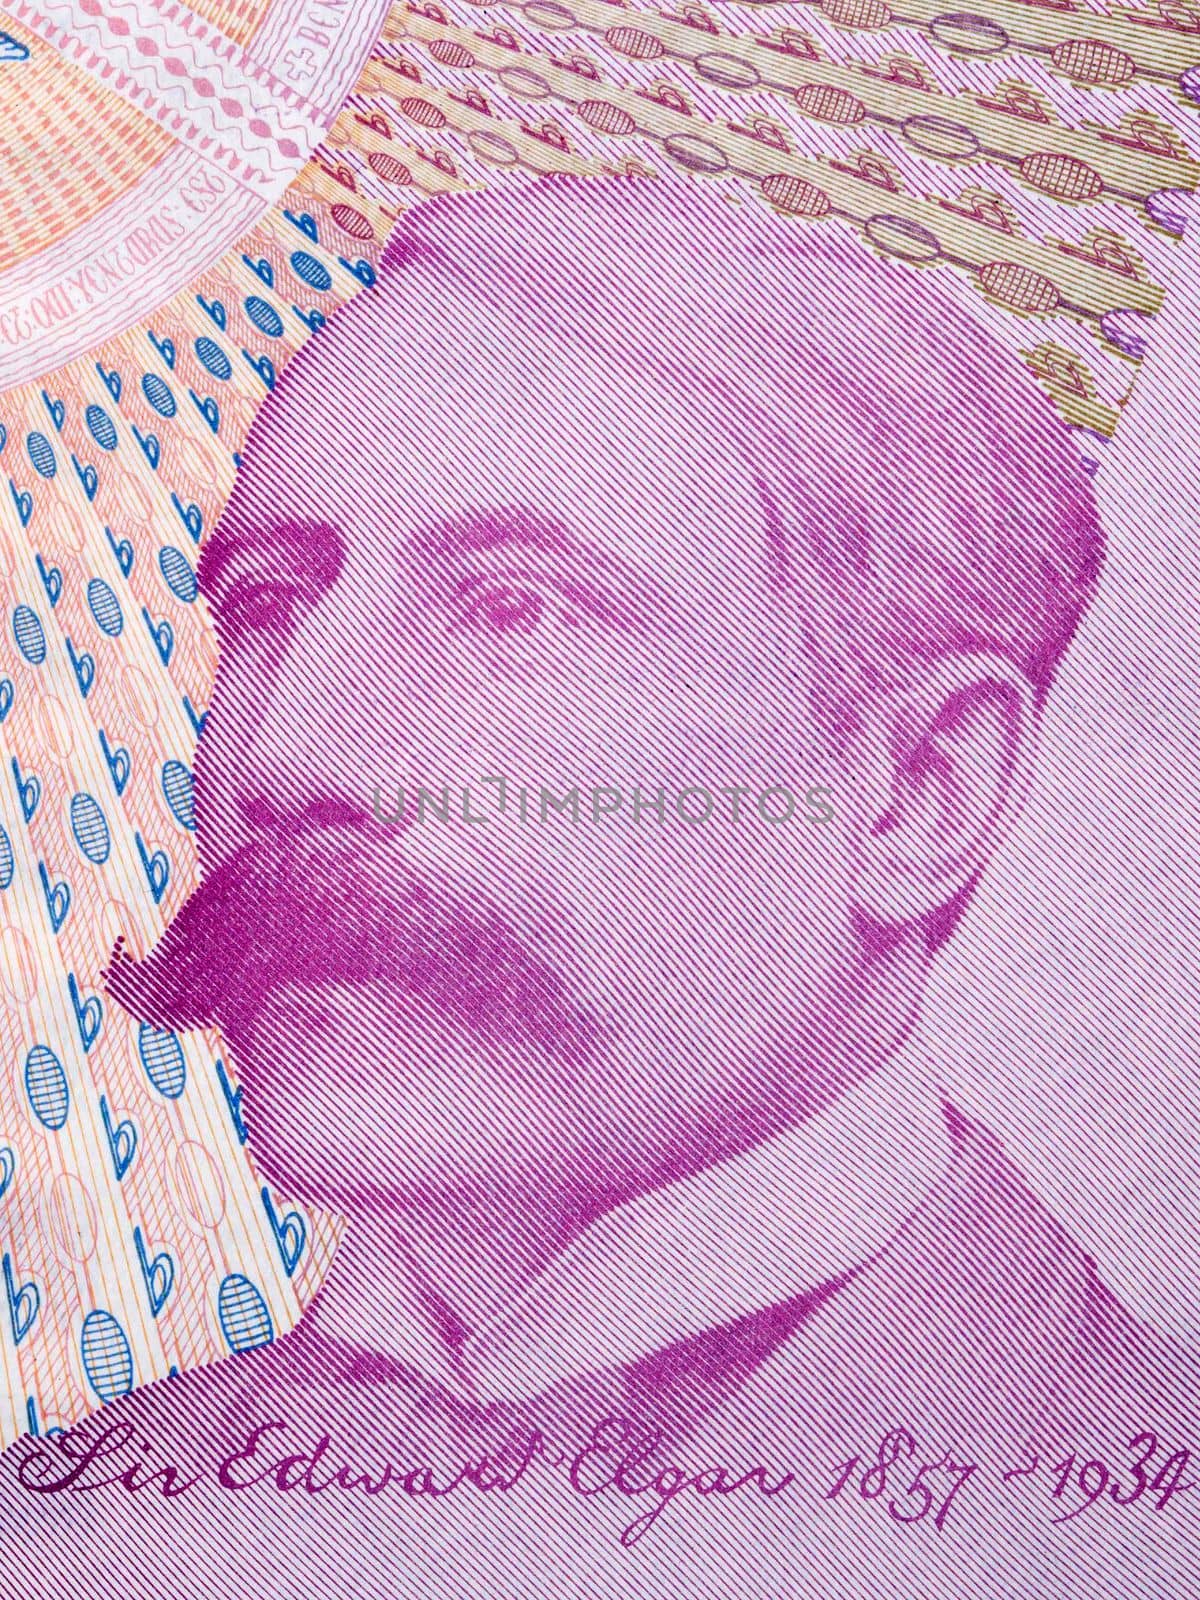 Edward Elgar a portrait from old English money by johan10